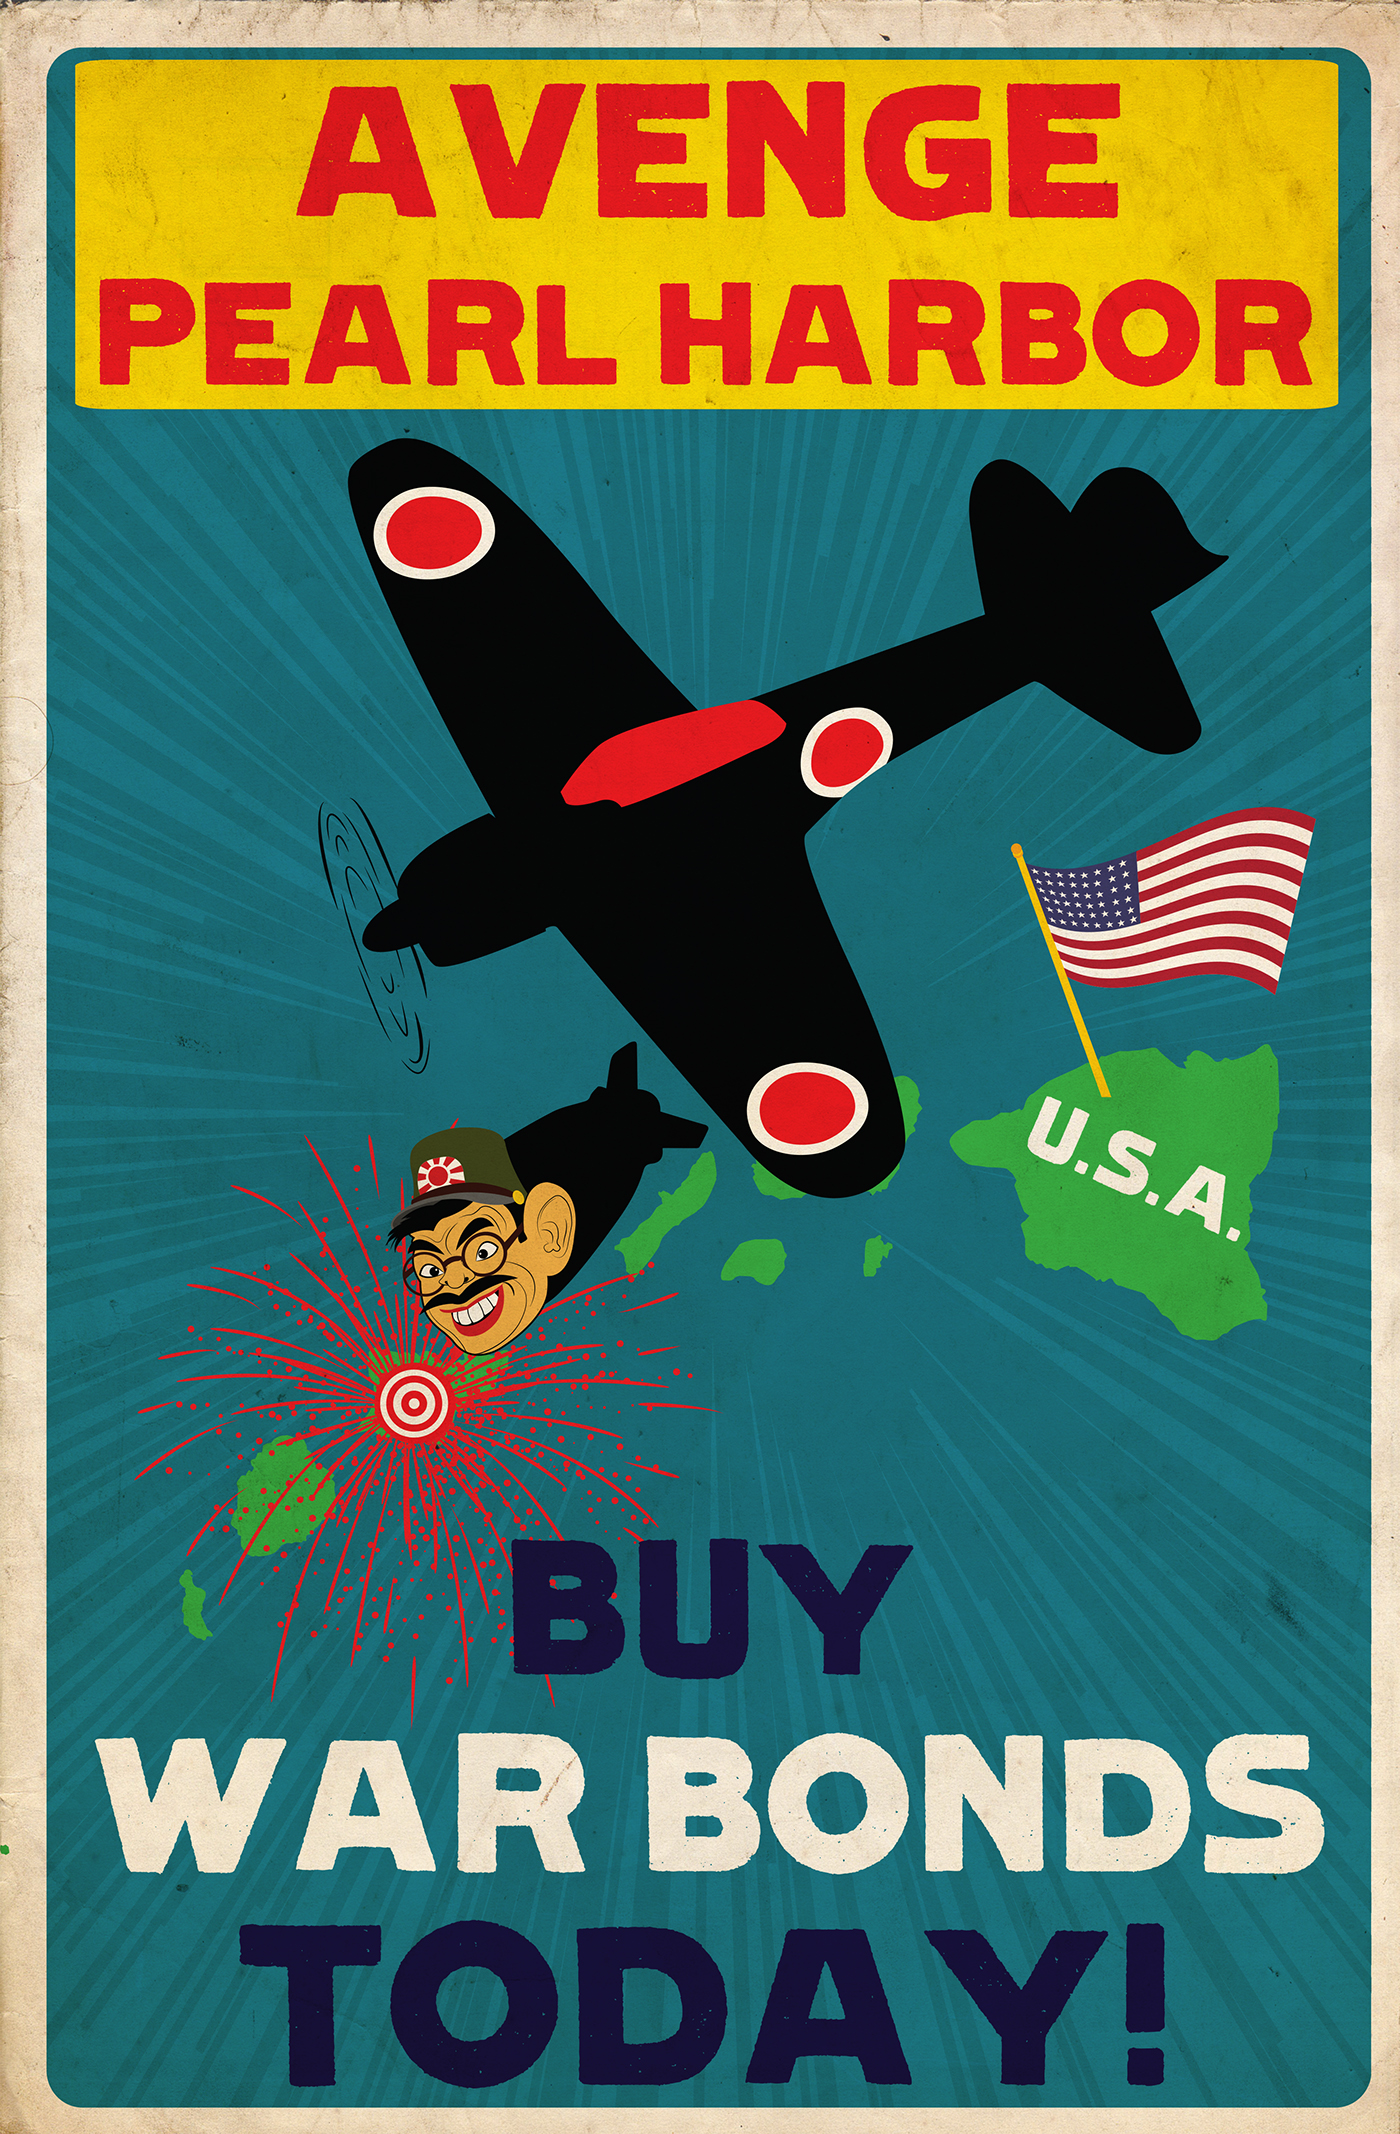 American Propaganda Poster (WWII era) on Behance